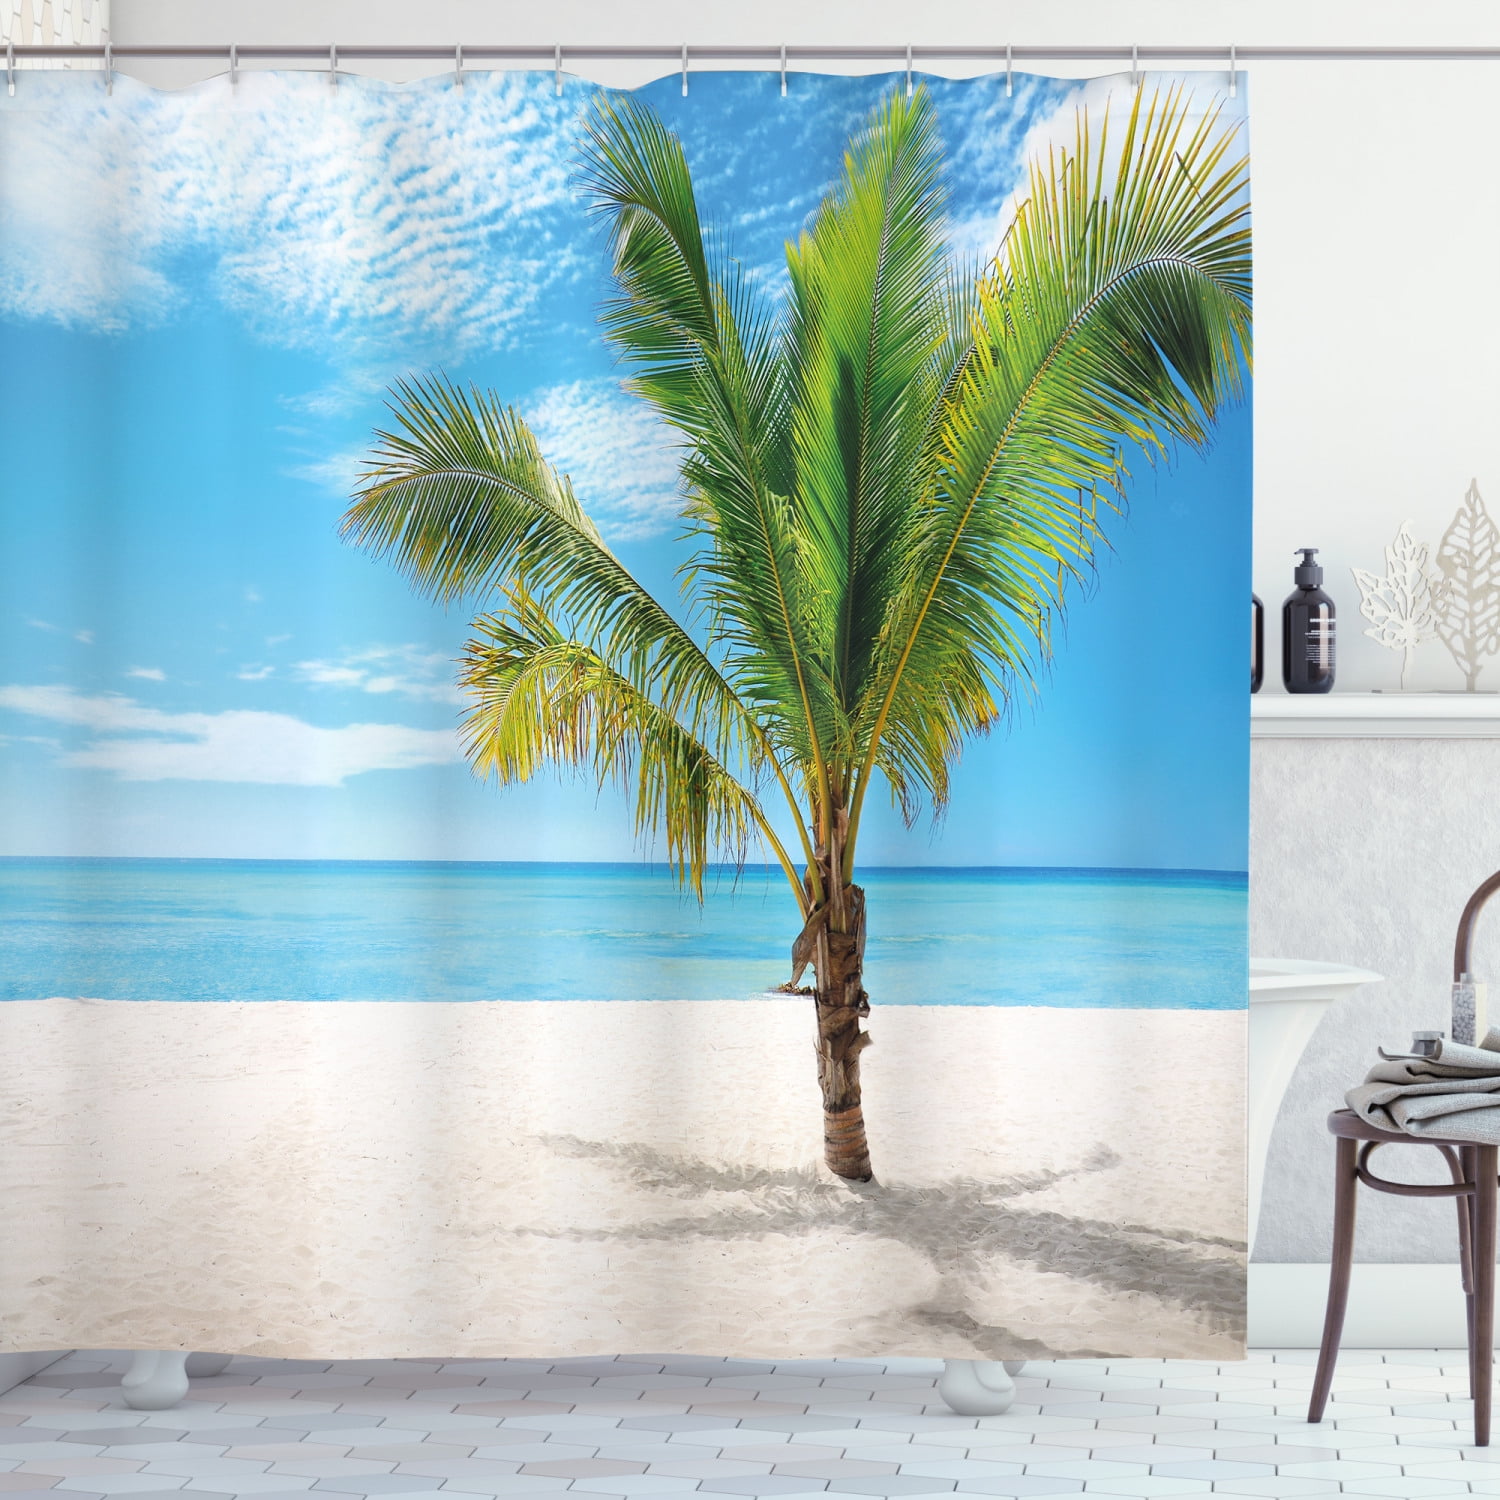 Tropical Beach Green Palm Trees Shower Curtain Set Bathroom Waterproof Fabric 